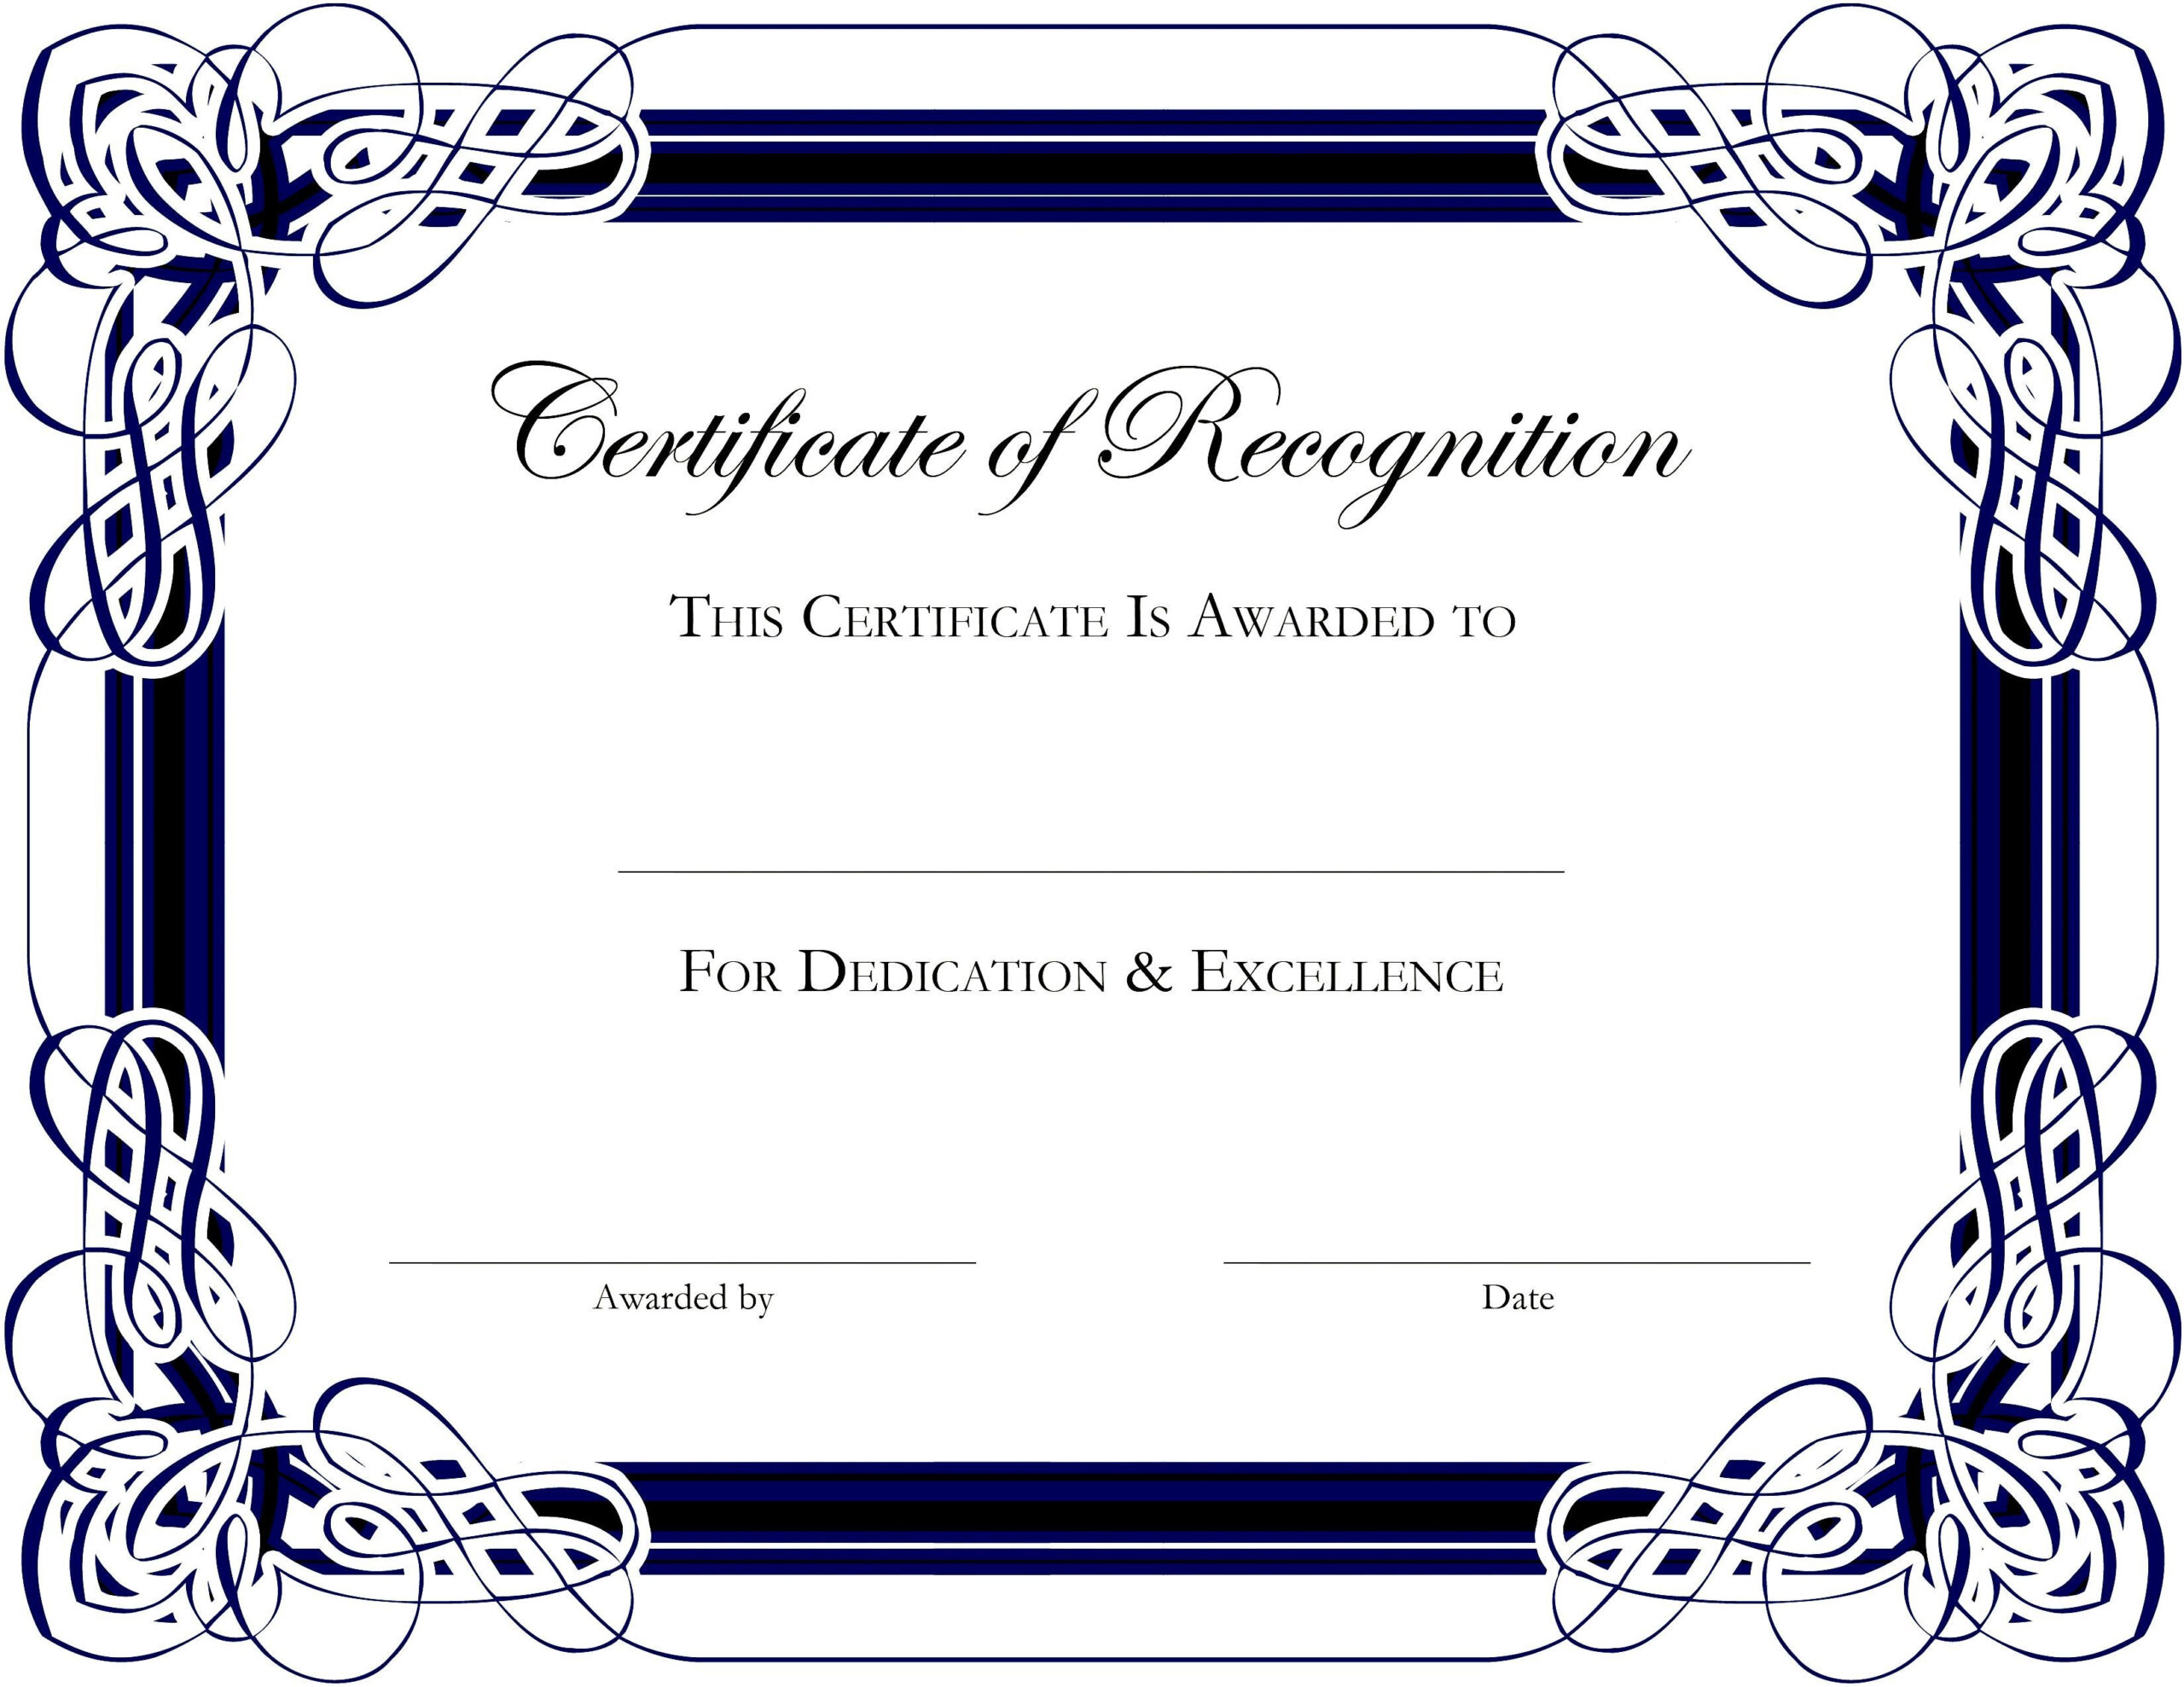 Award Templates For Microsoft Publisher | Besttemplate123 Regarding Certificates Of Appreciation Template